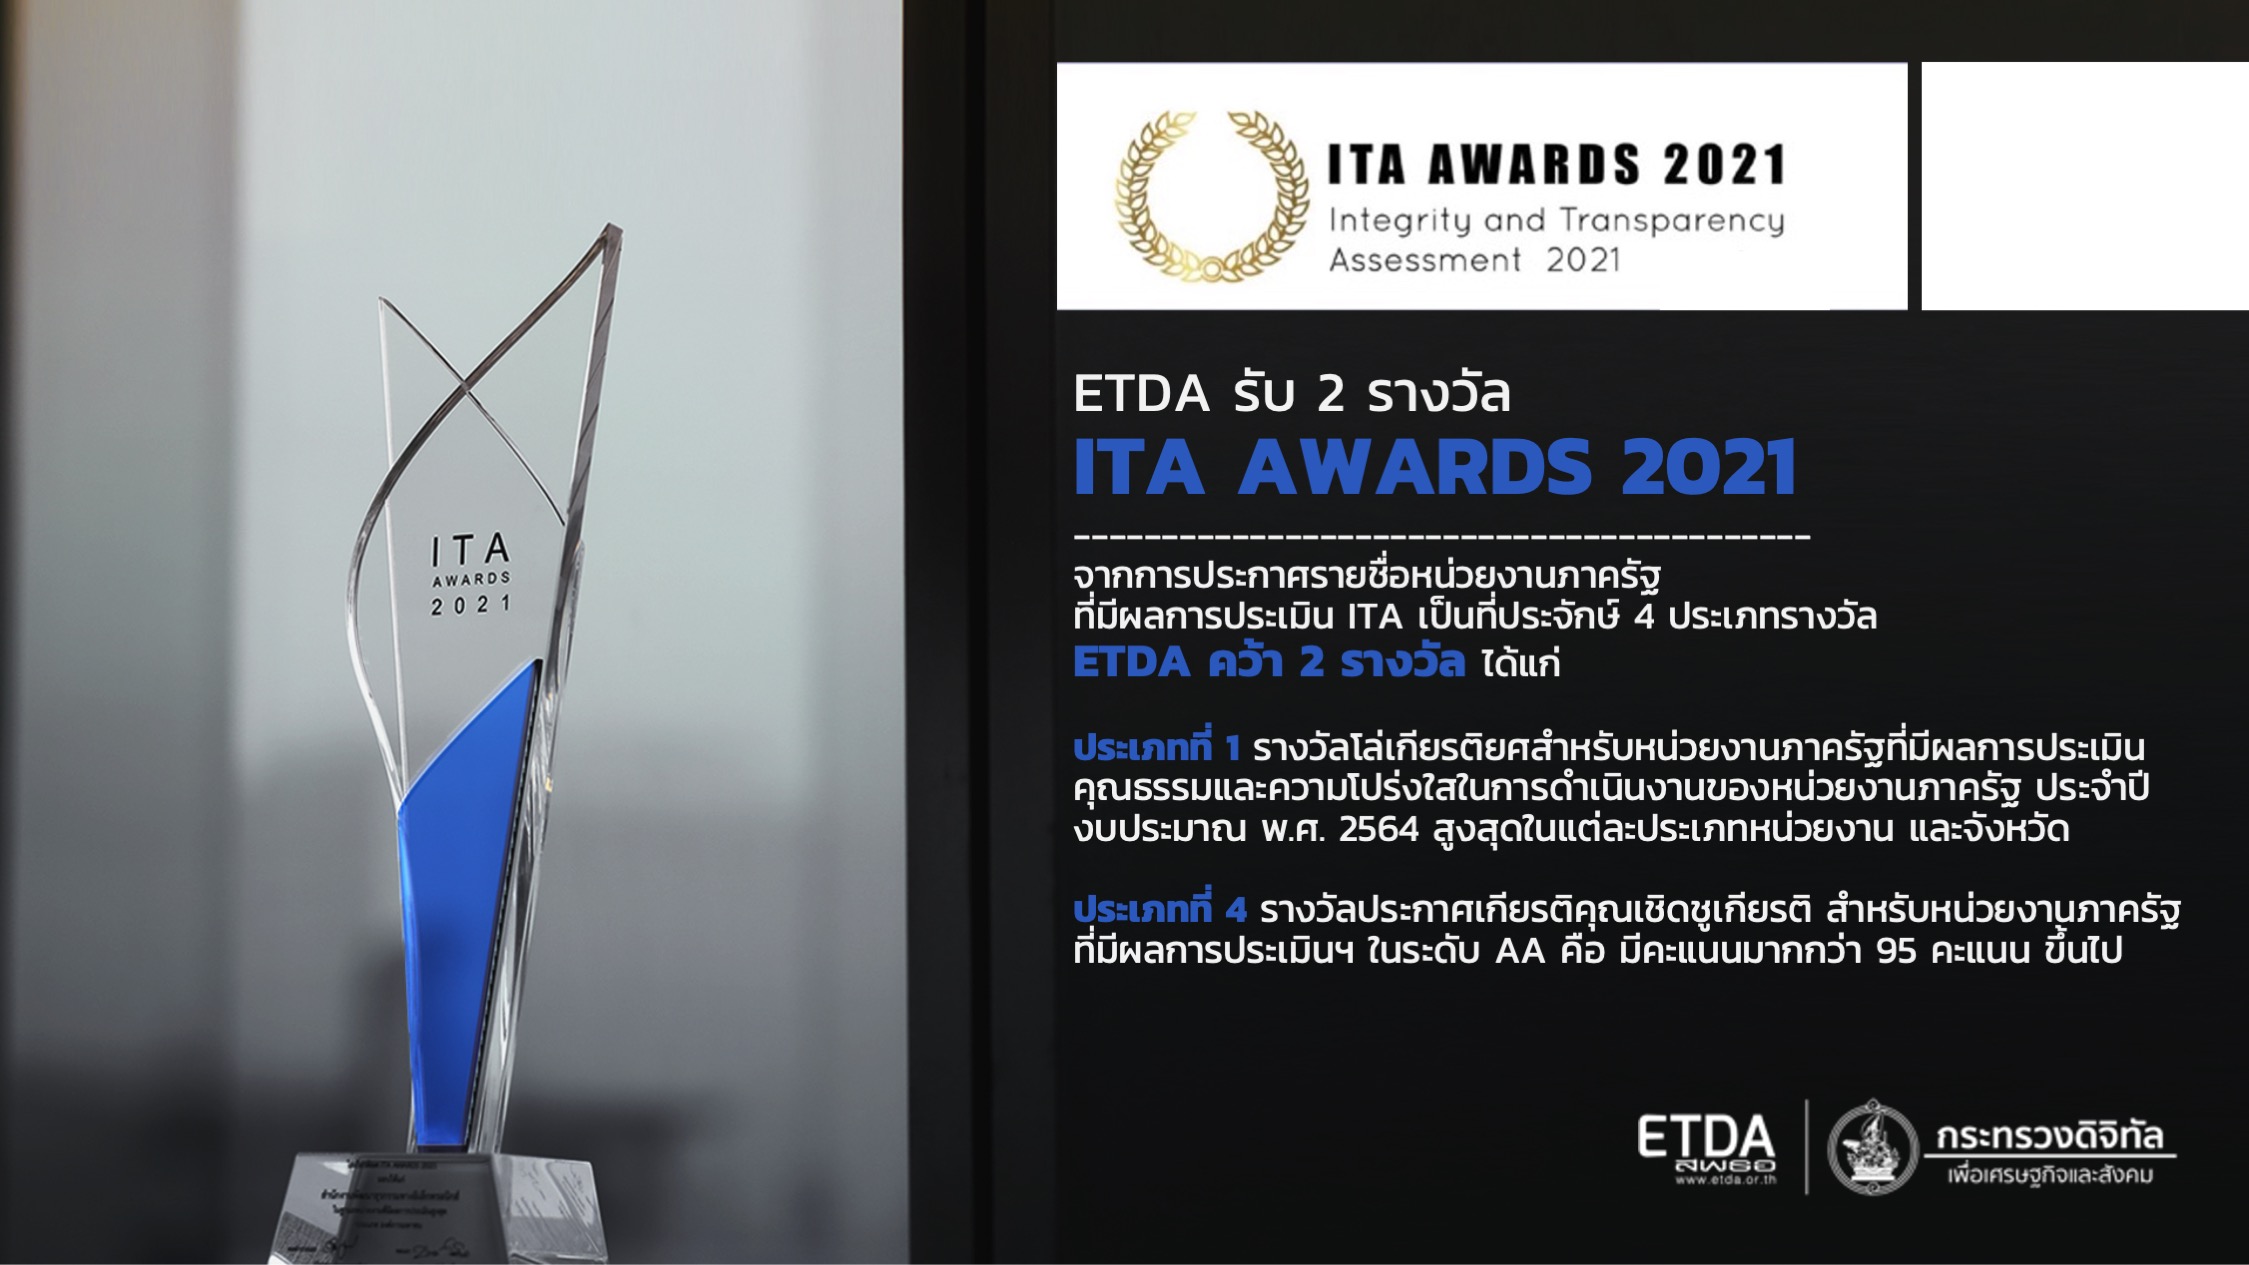 ETDA รับ 2 รางวัล ITA AWARDS 2021